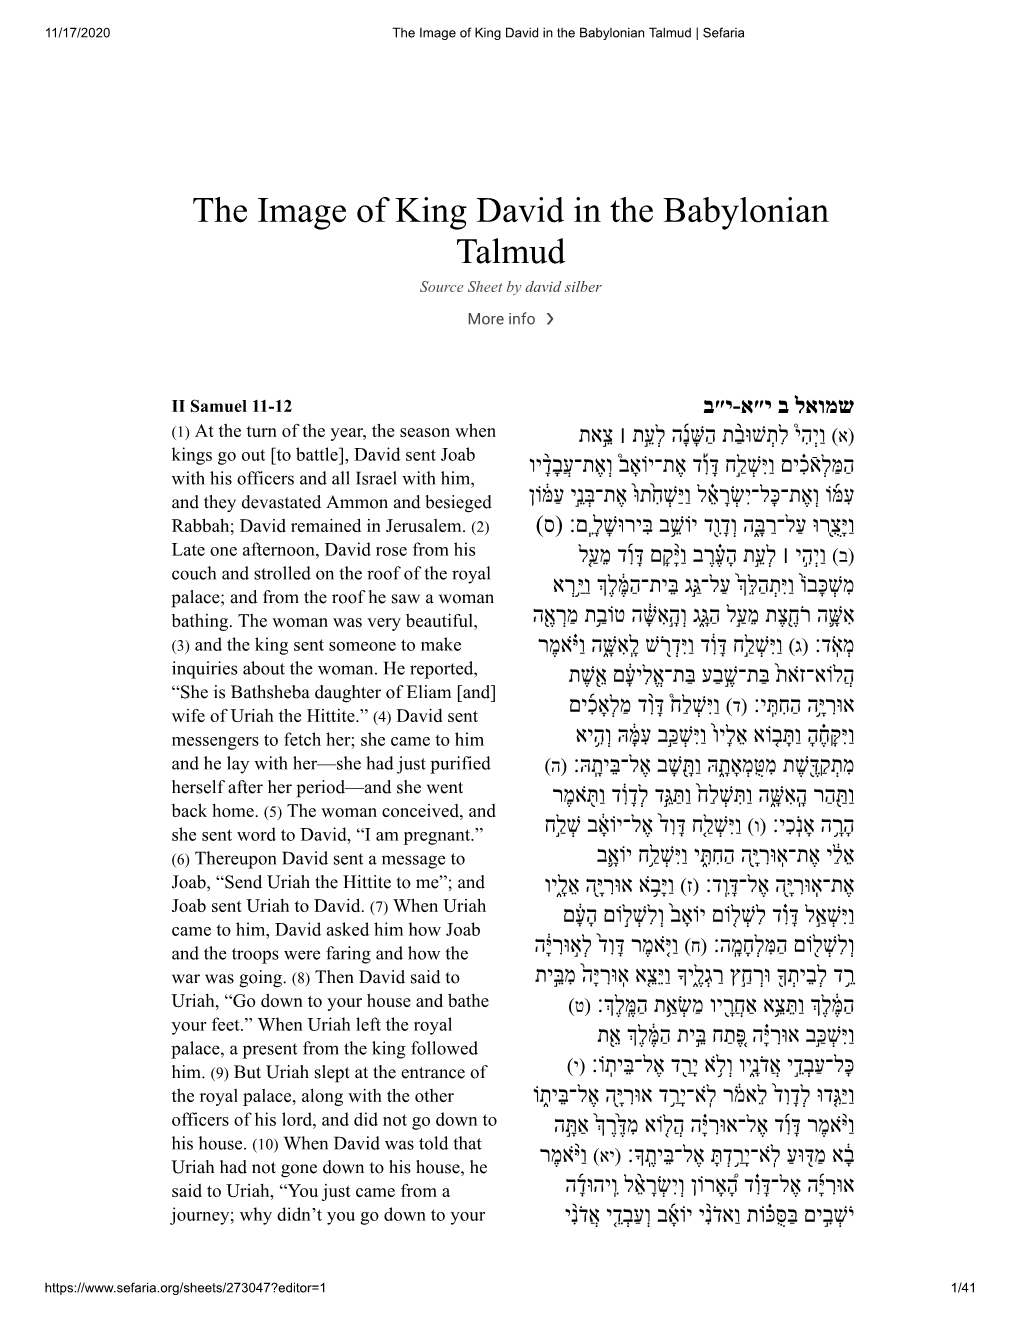 The Image of King David in the Babylonian Talmud | Sefaria